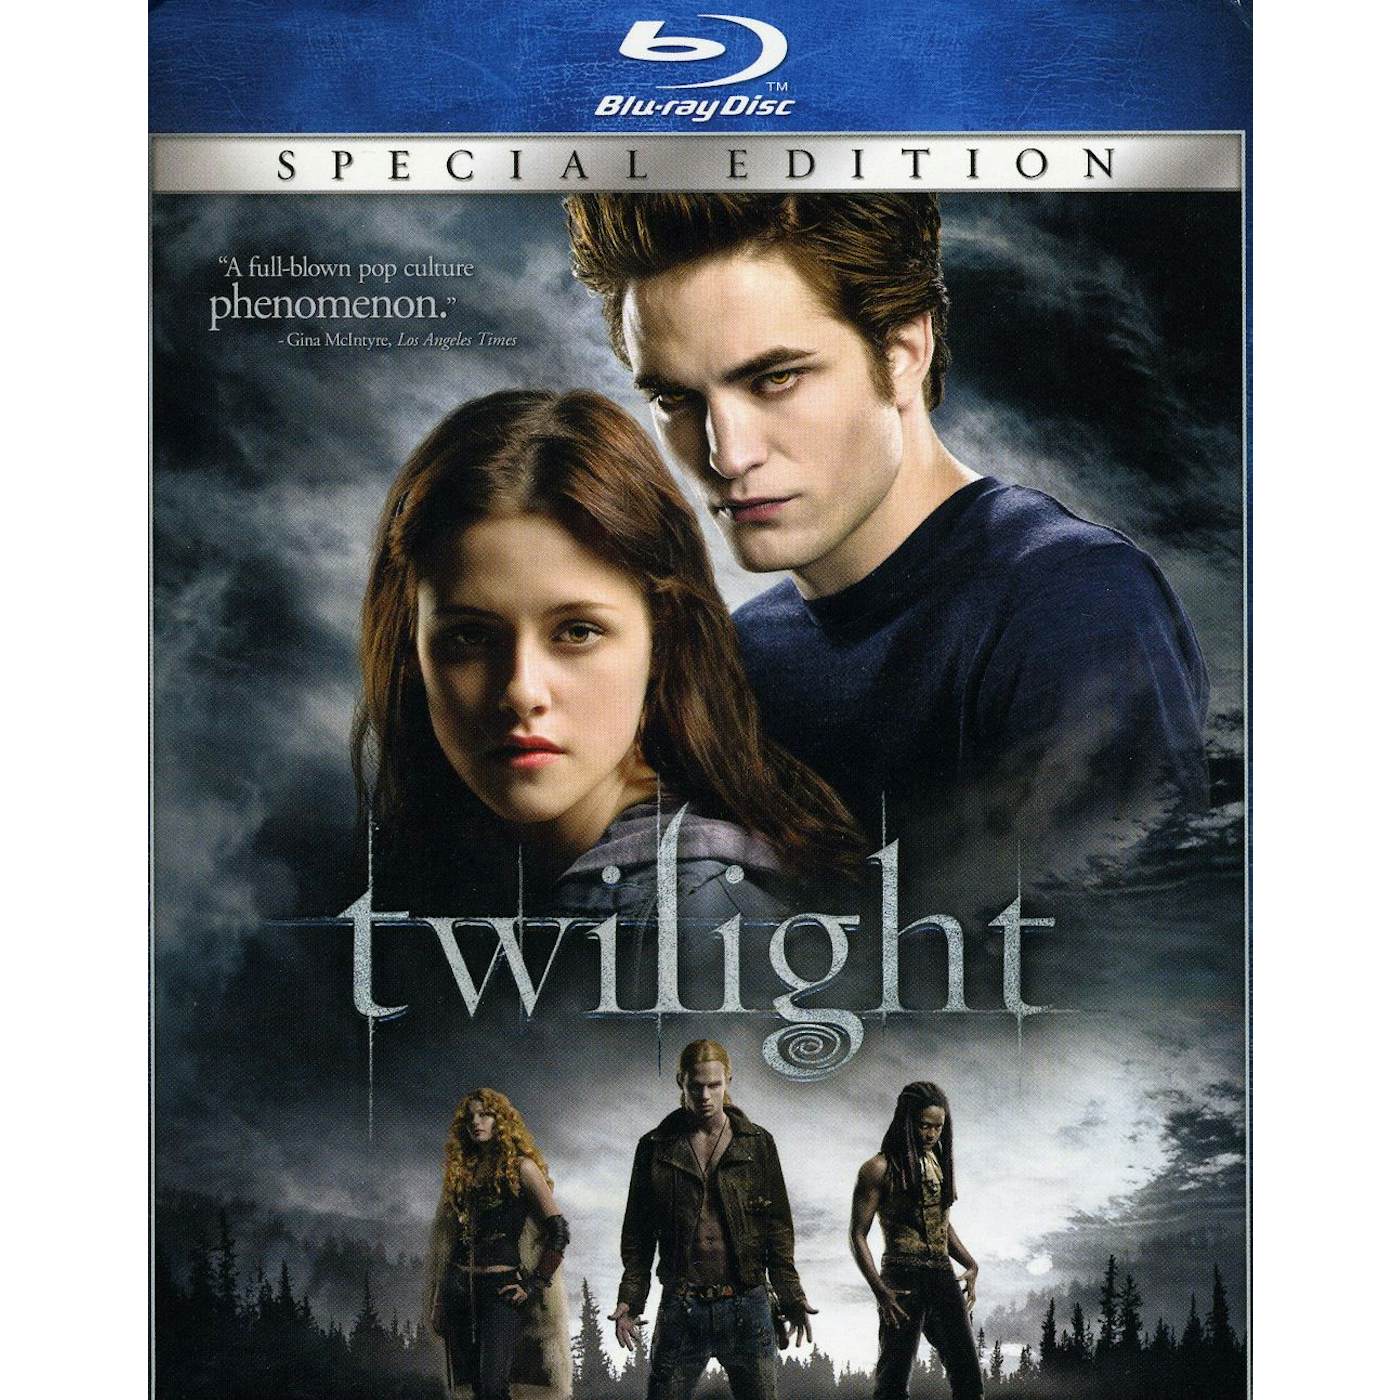 TWILIGHT (2008) Blu-ray